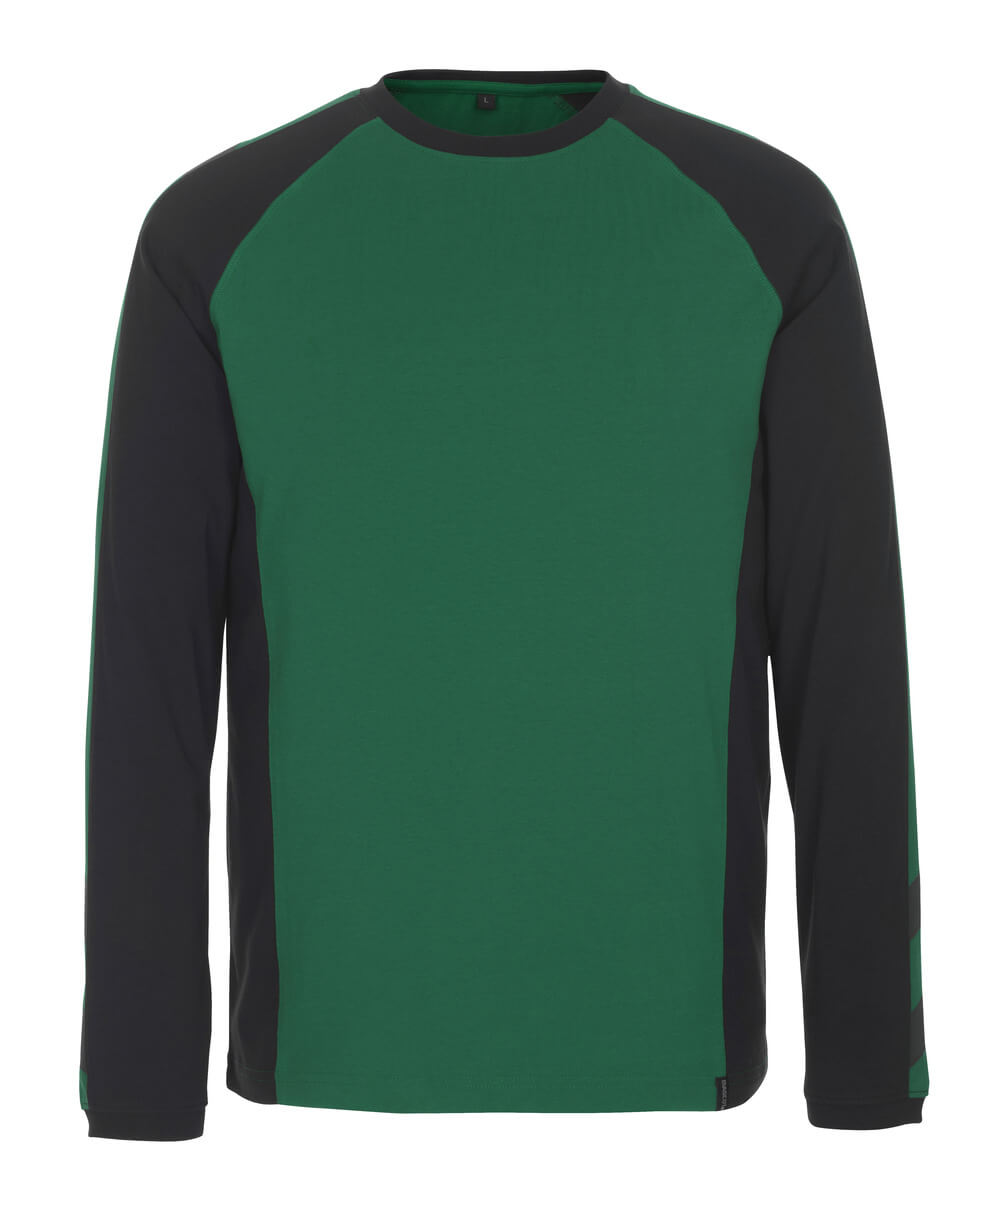 Mascot UNIQUE  Bielefeld T-shirt, long-sleeved 50568 green/black